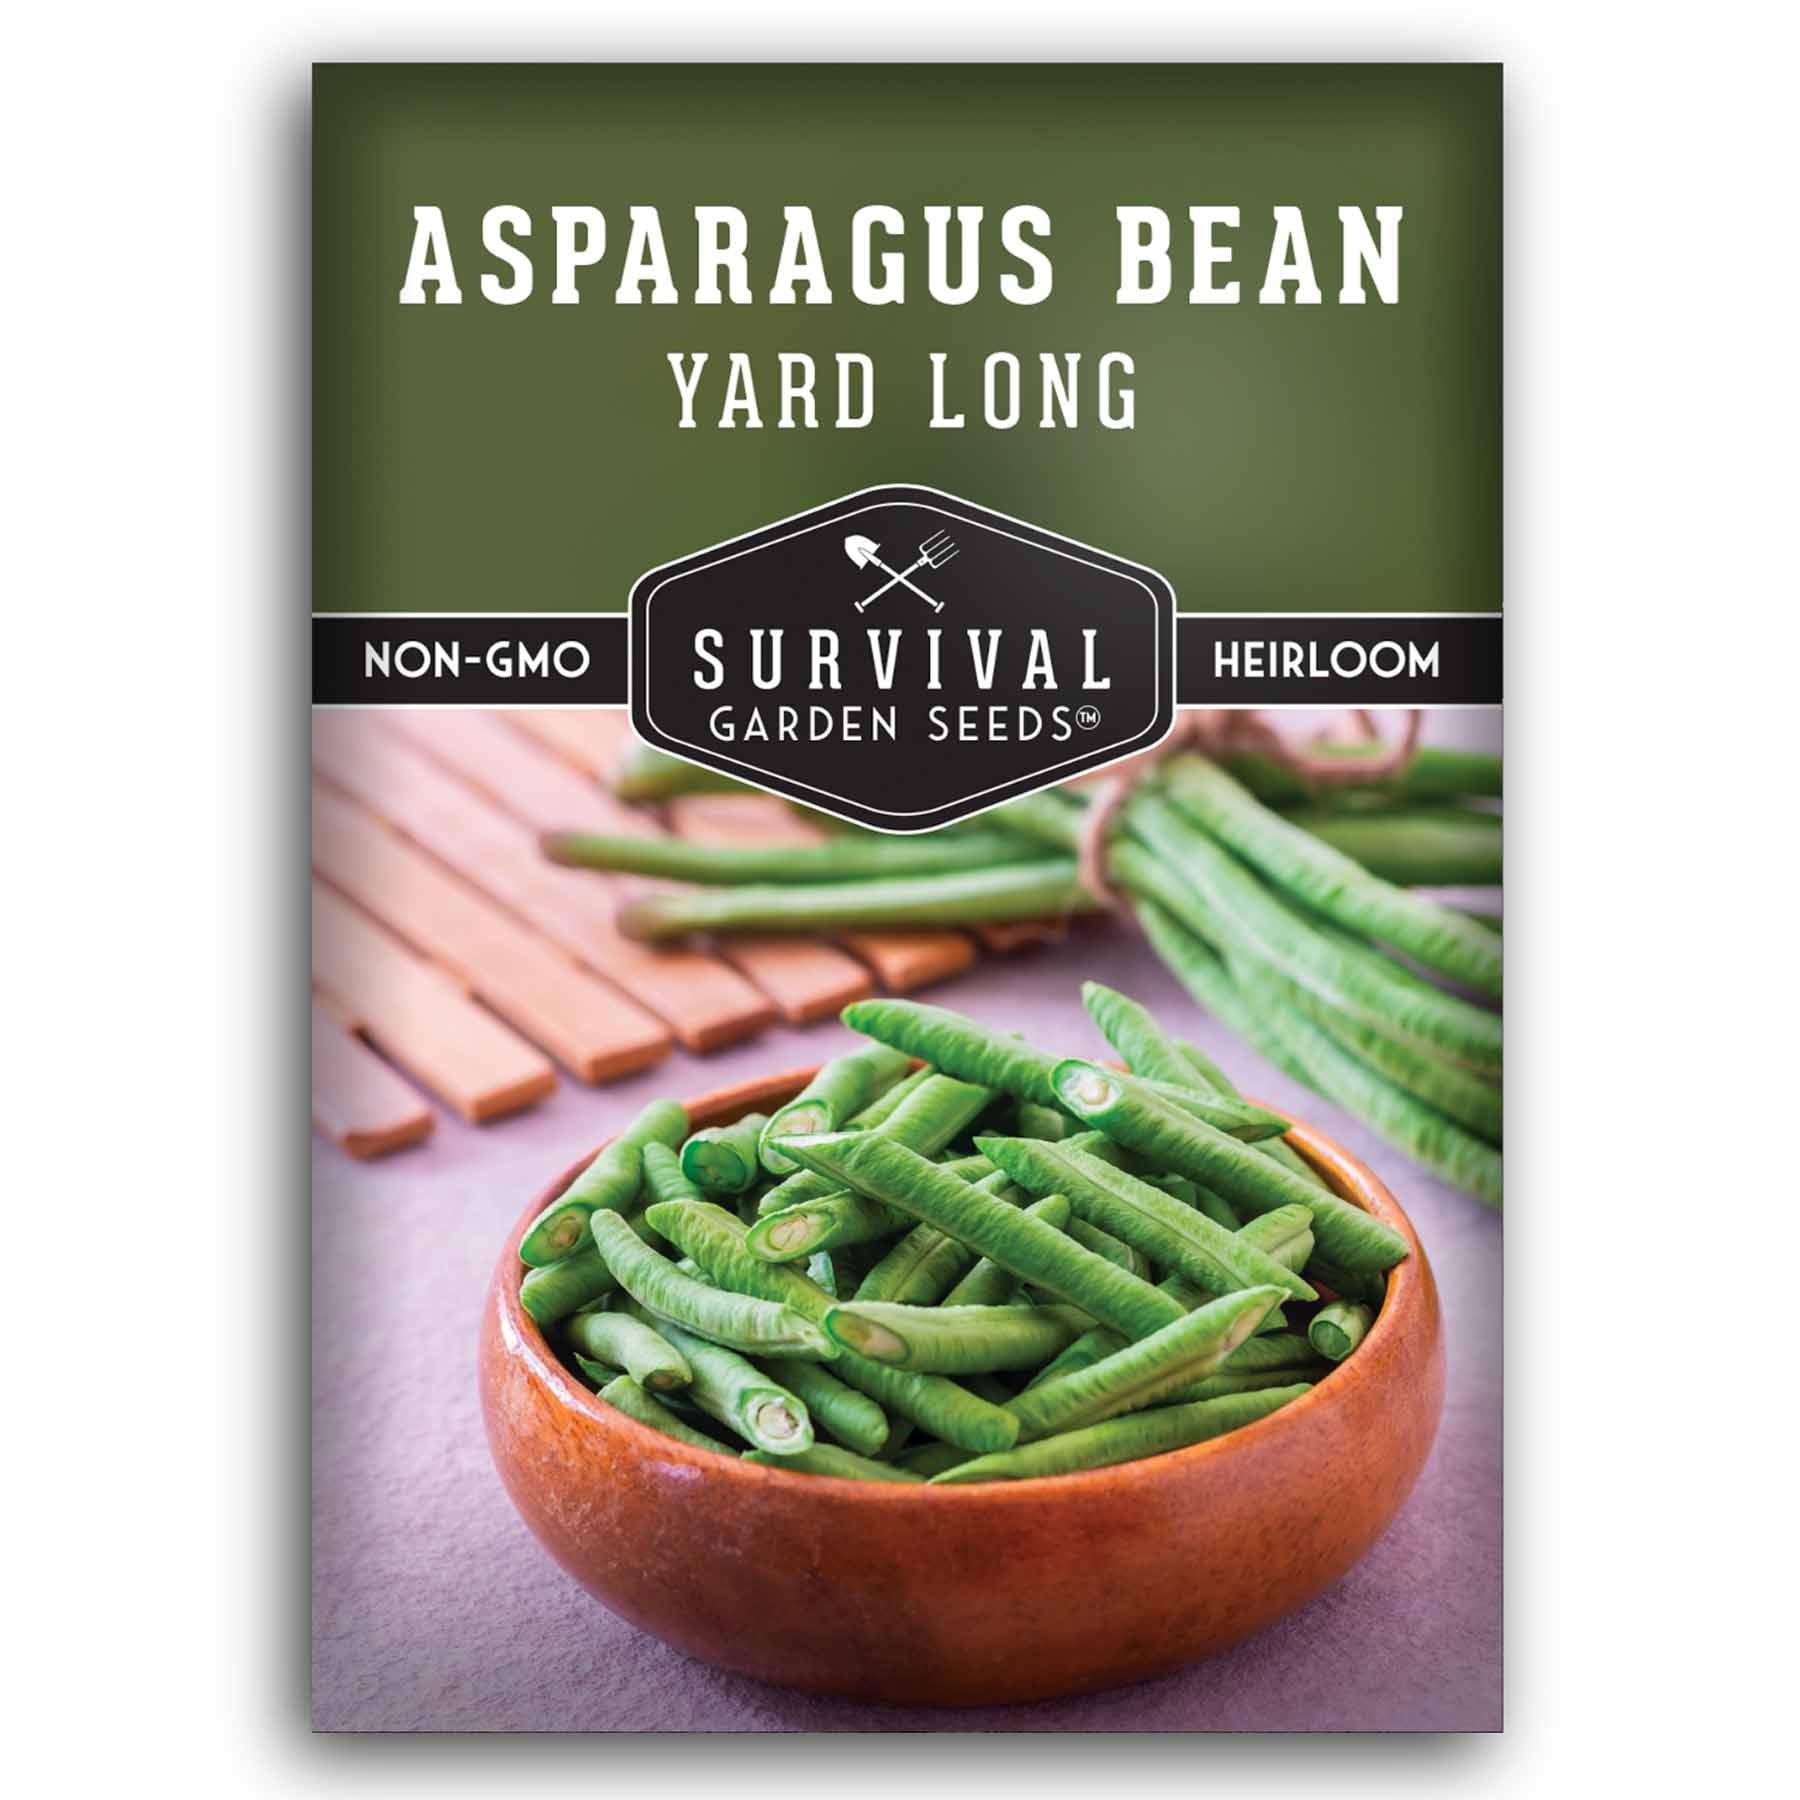 1 packet of Asparagus Bean seeds